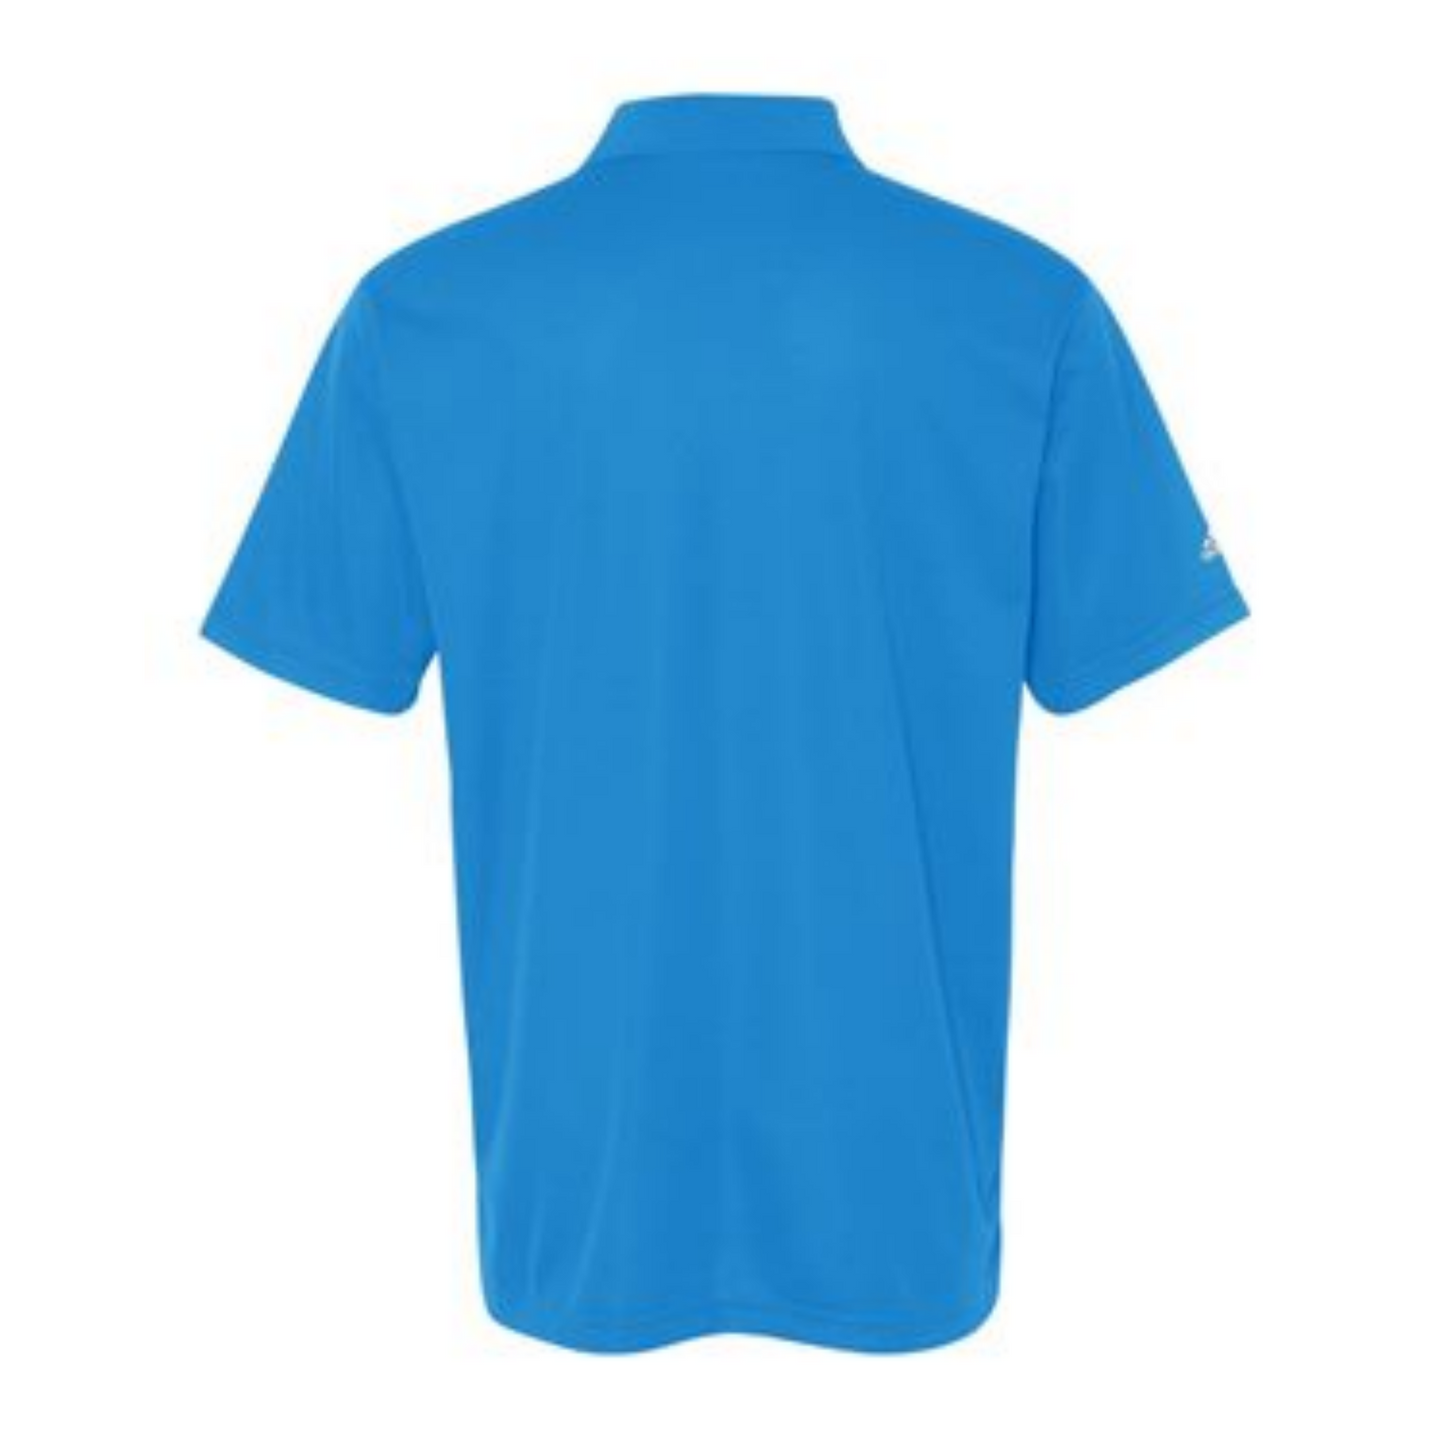 Adidas Climalite Sport Shirt - Coast